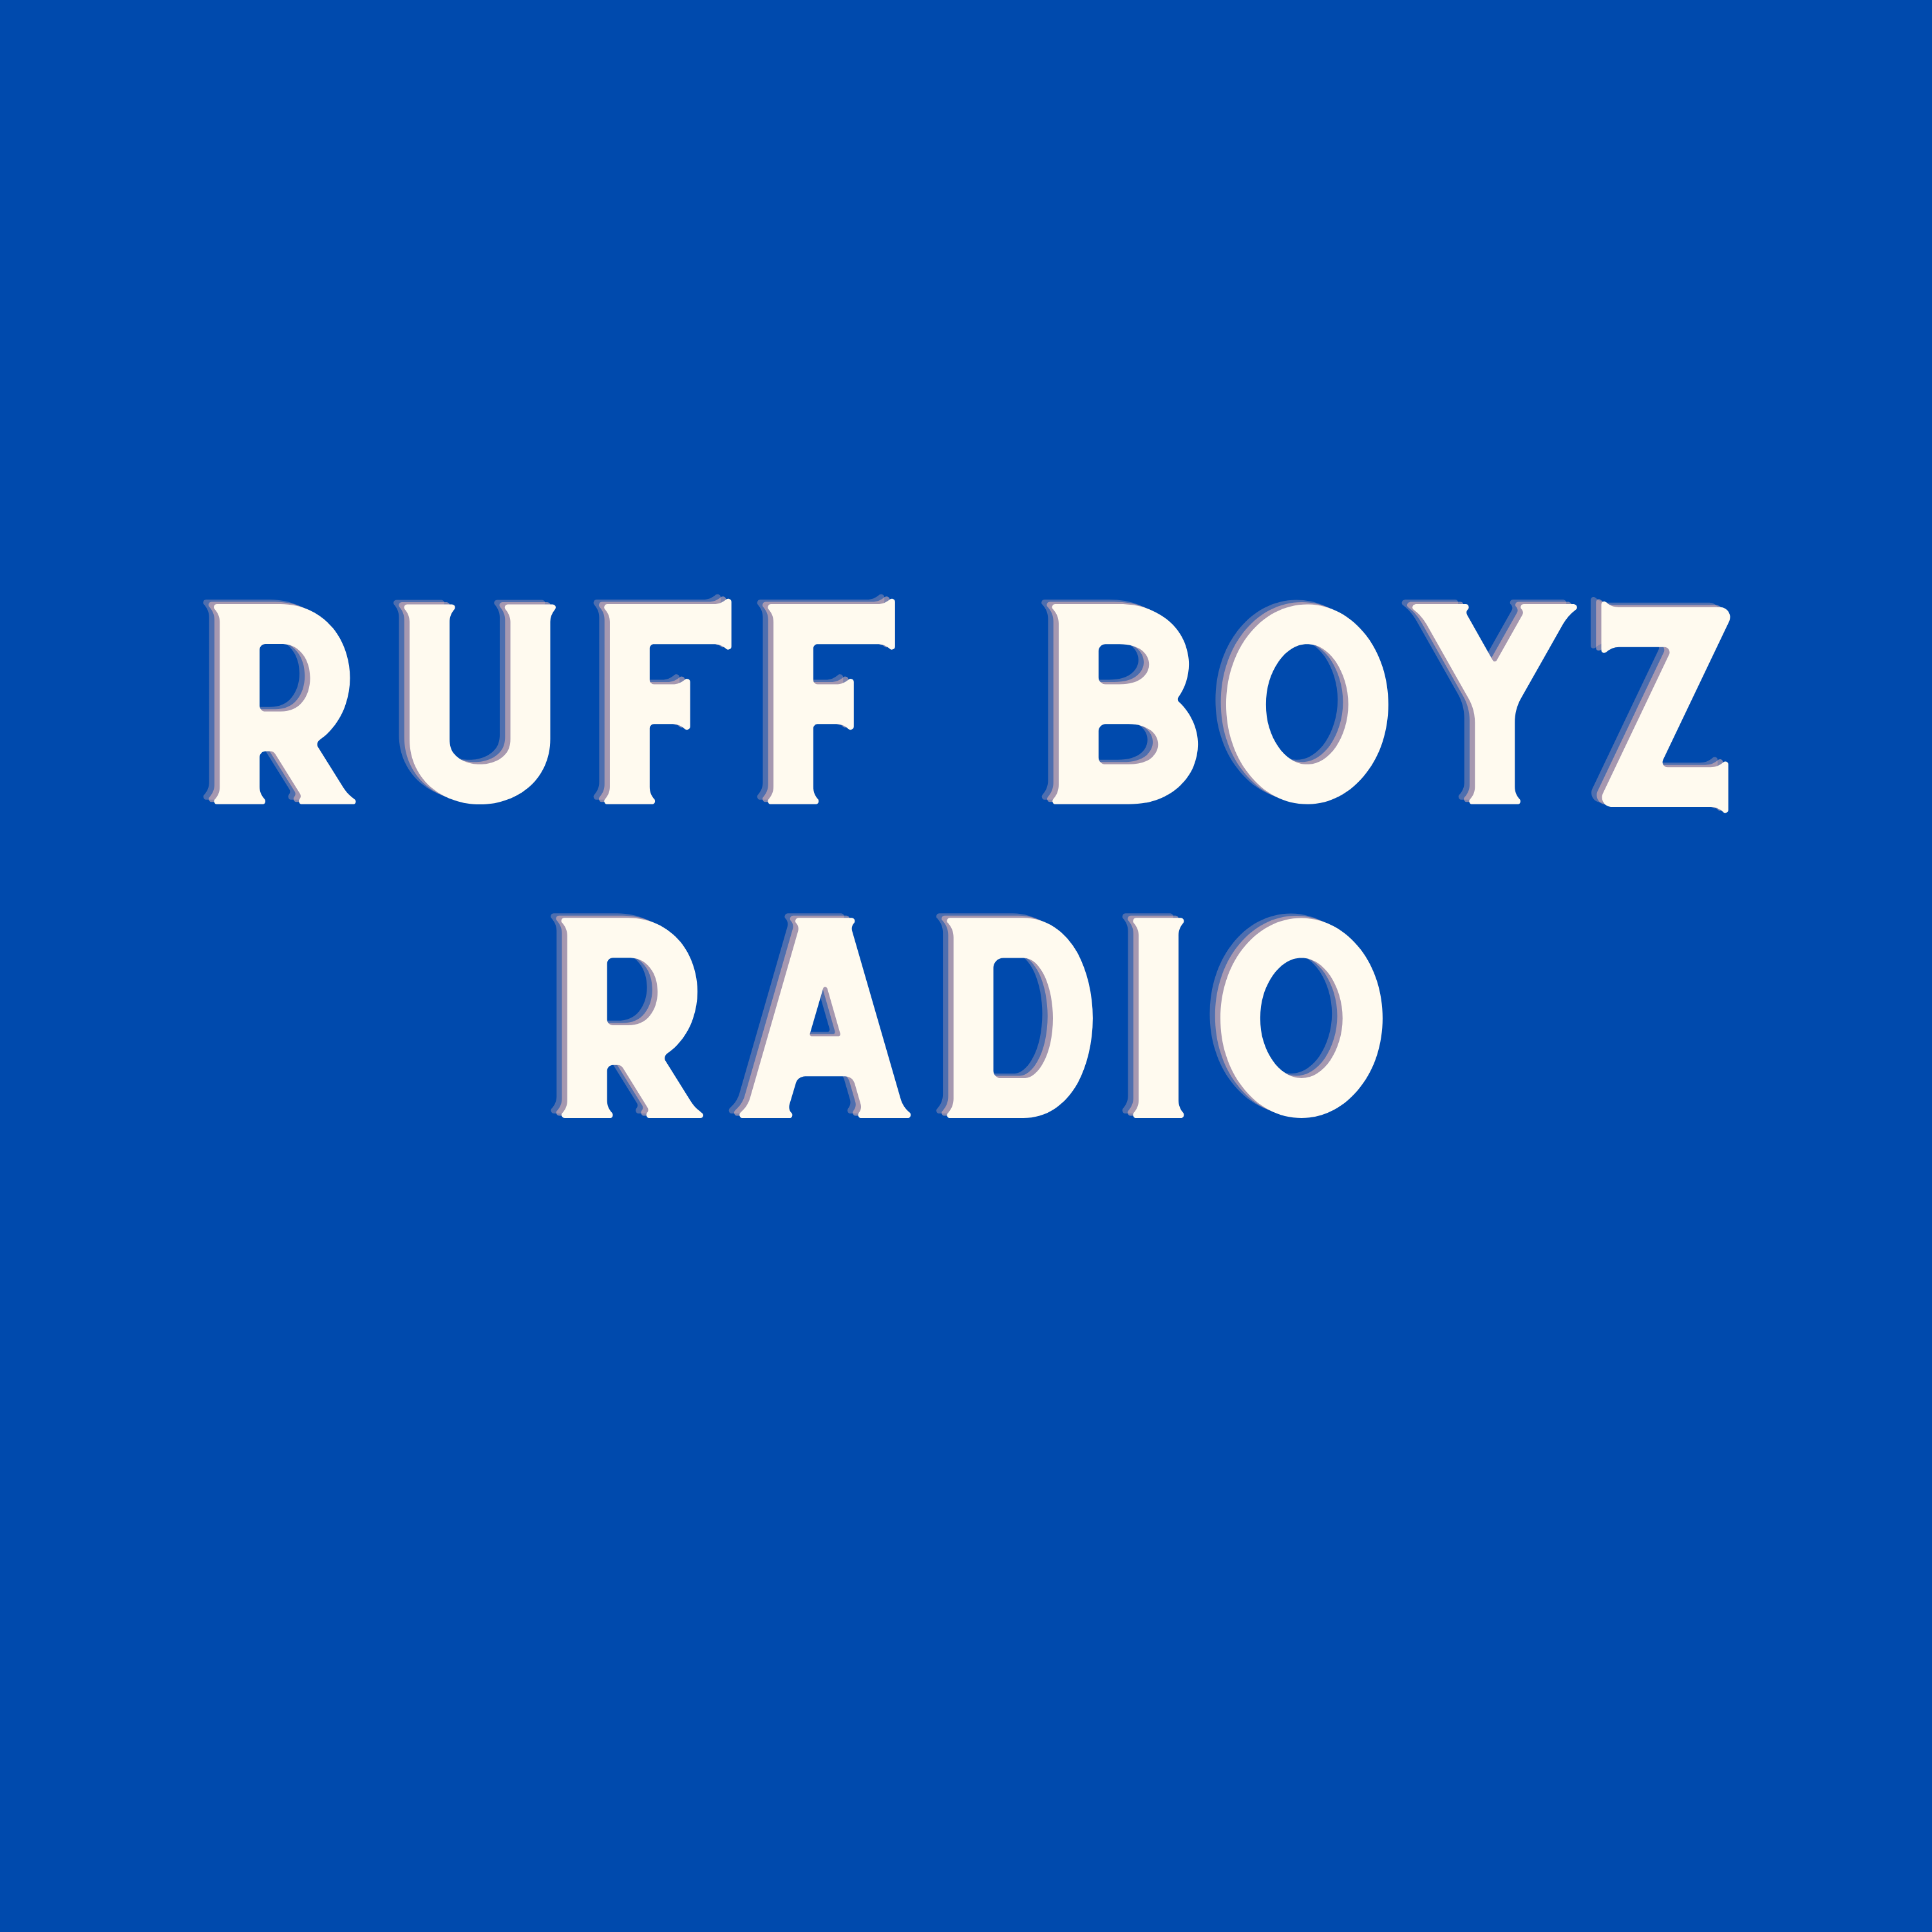 Ruff Boyz Radio - VSC NETWORK